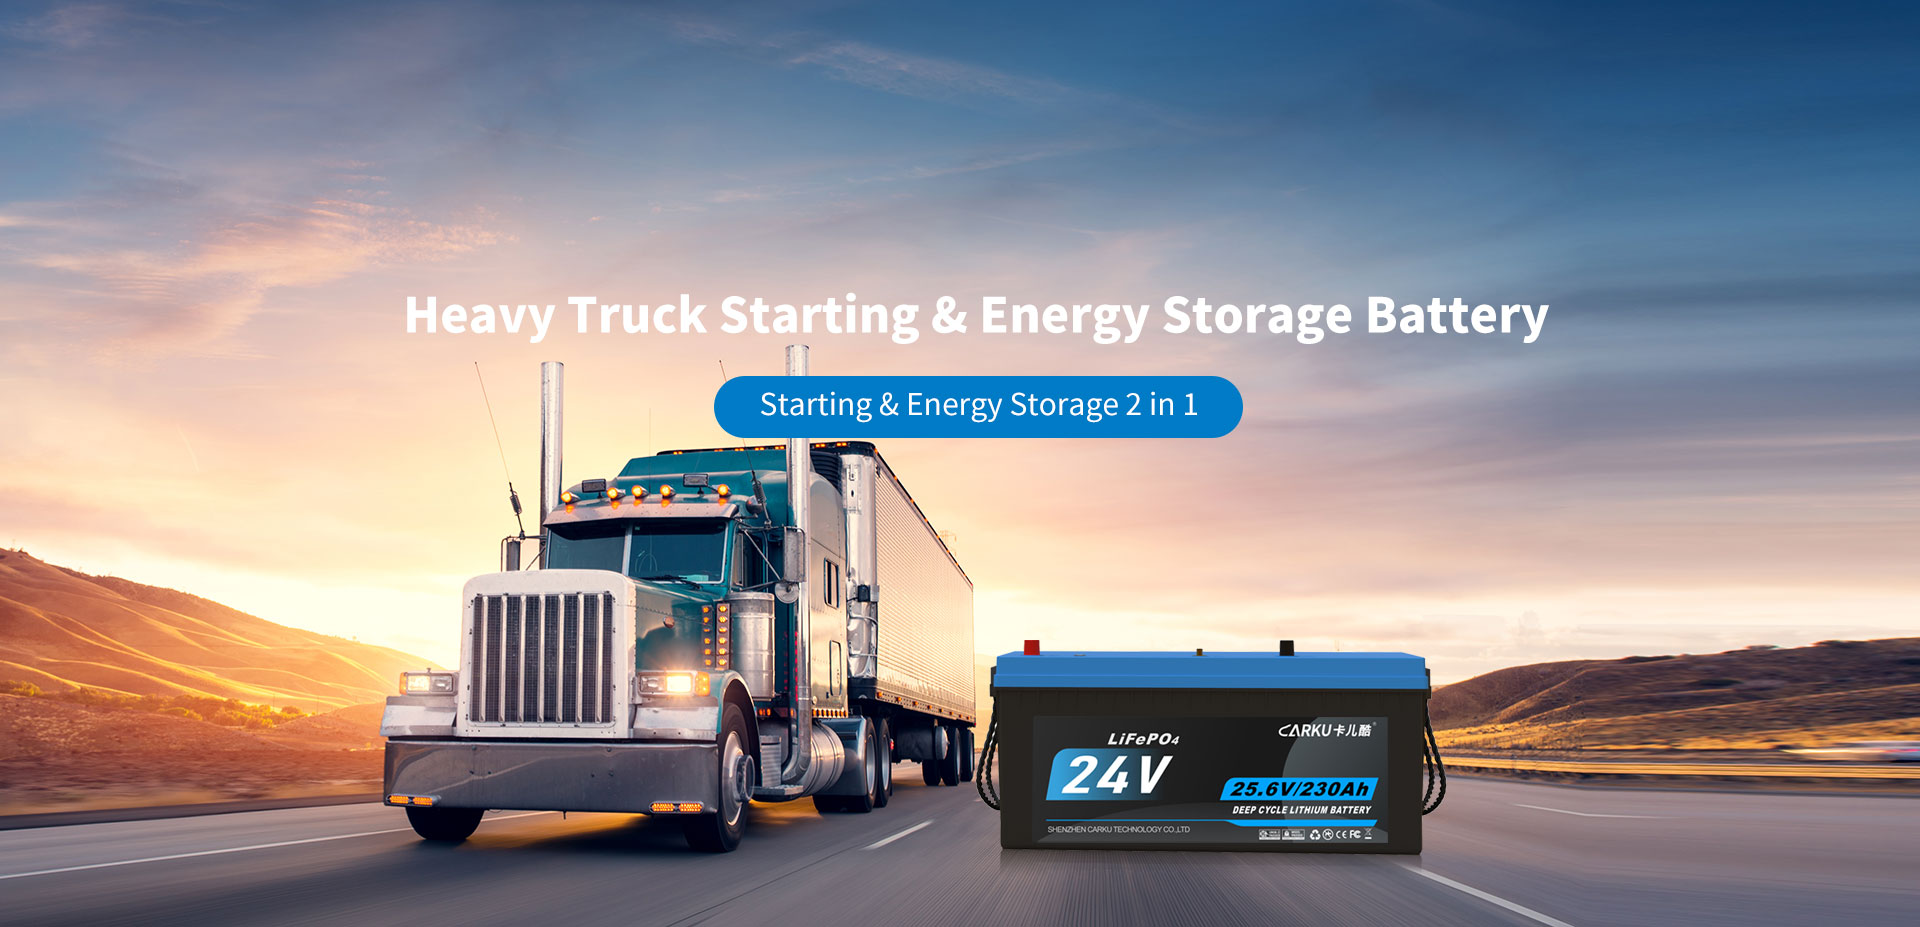 Heavy Truck Starting & Energy Storage Battery